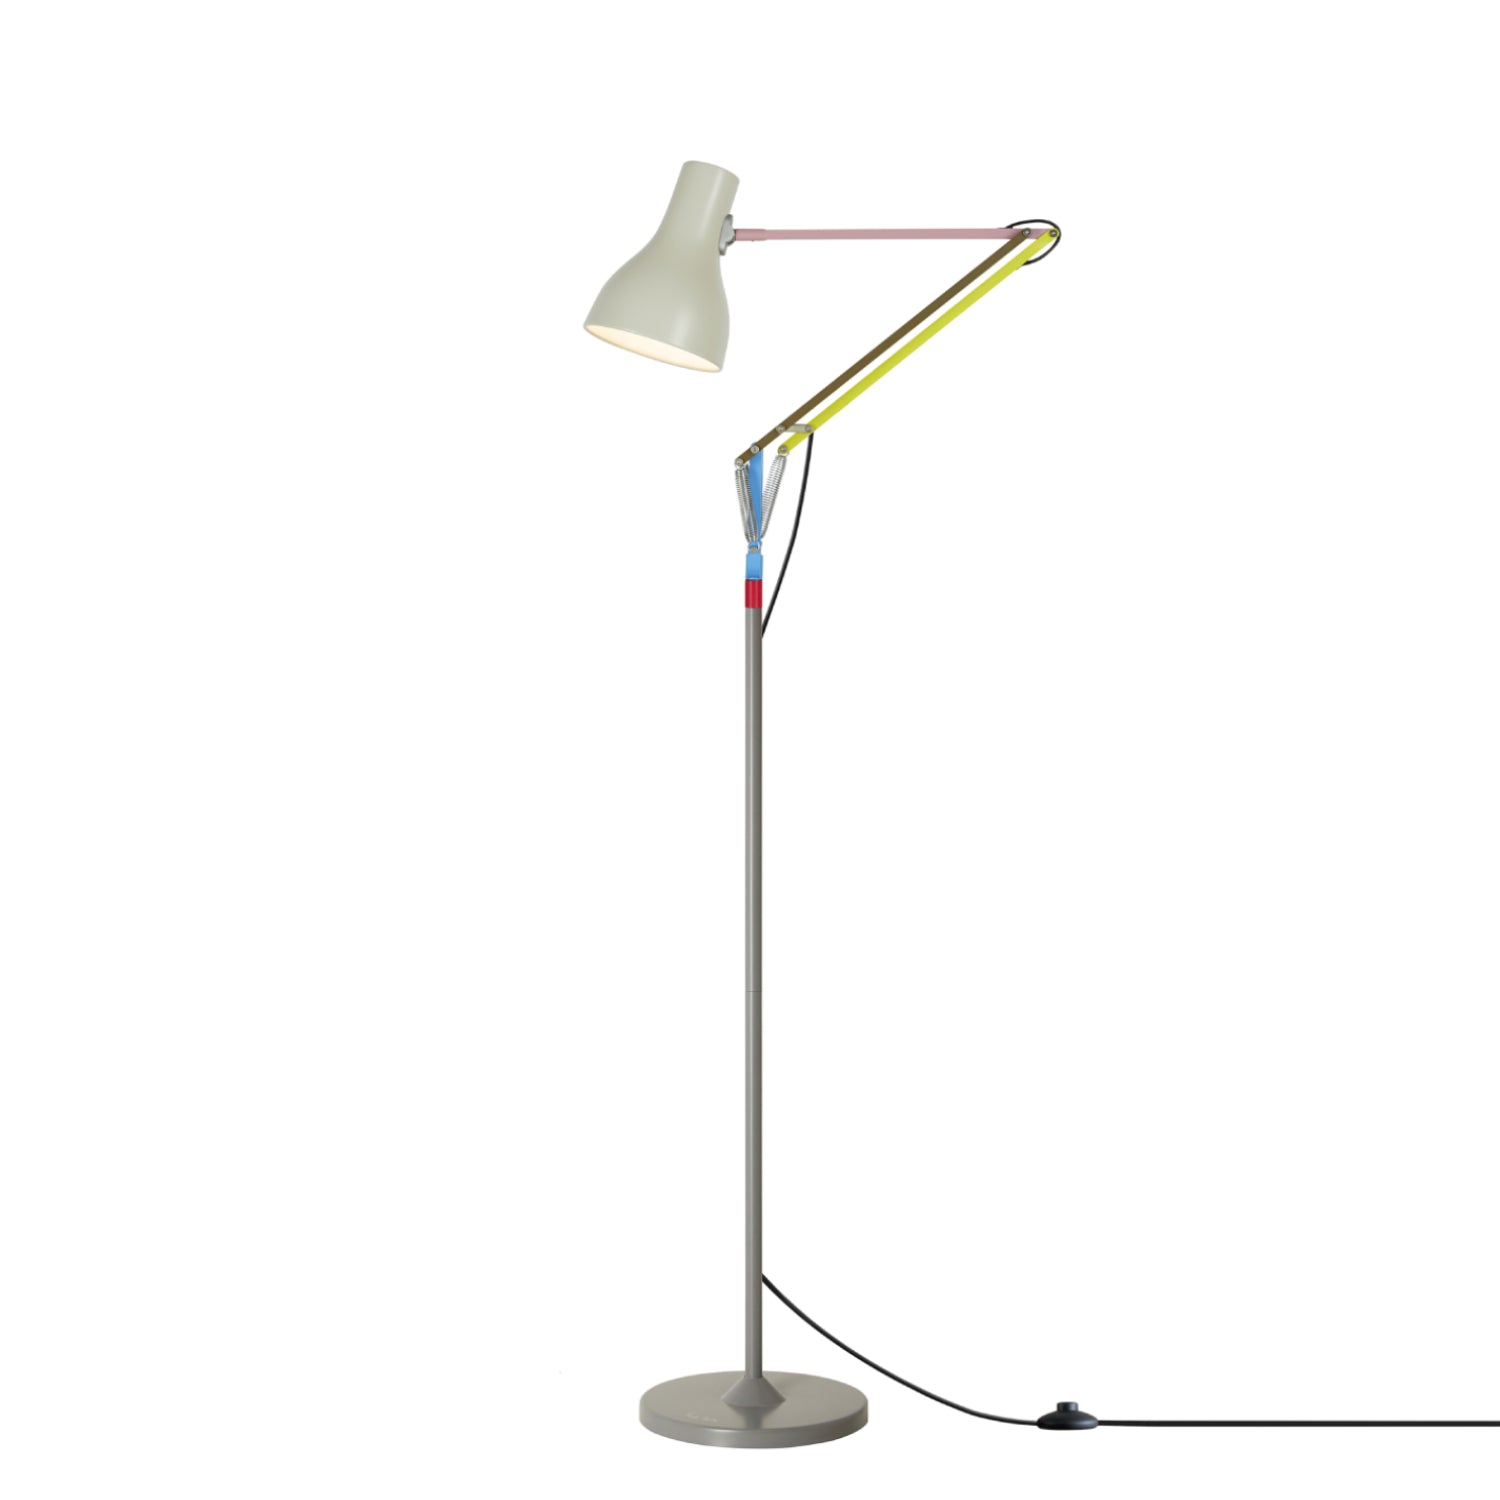 Type 75 Floor Lamp: Paul Smith Edition + One